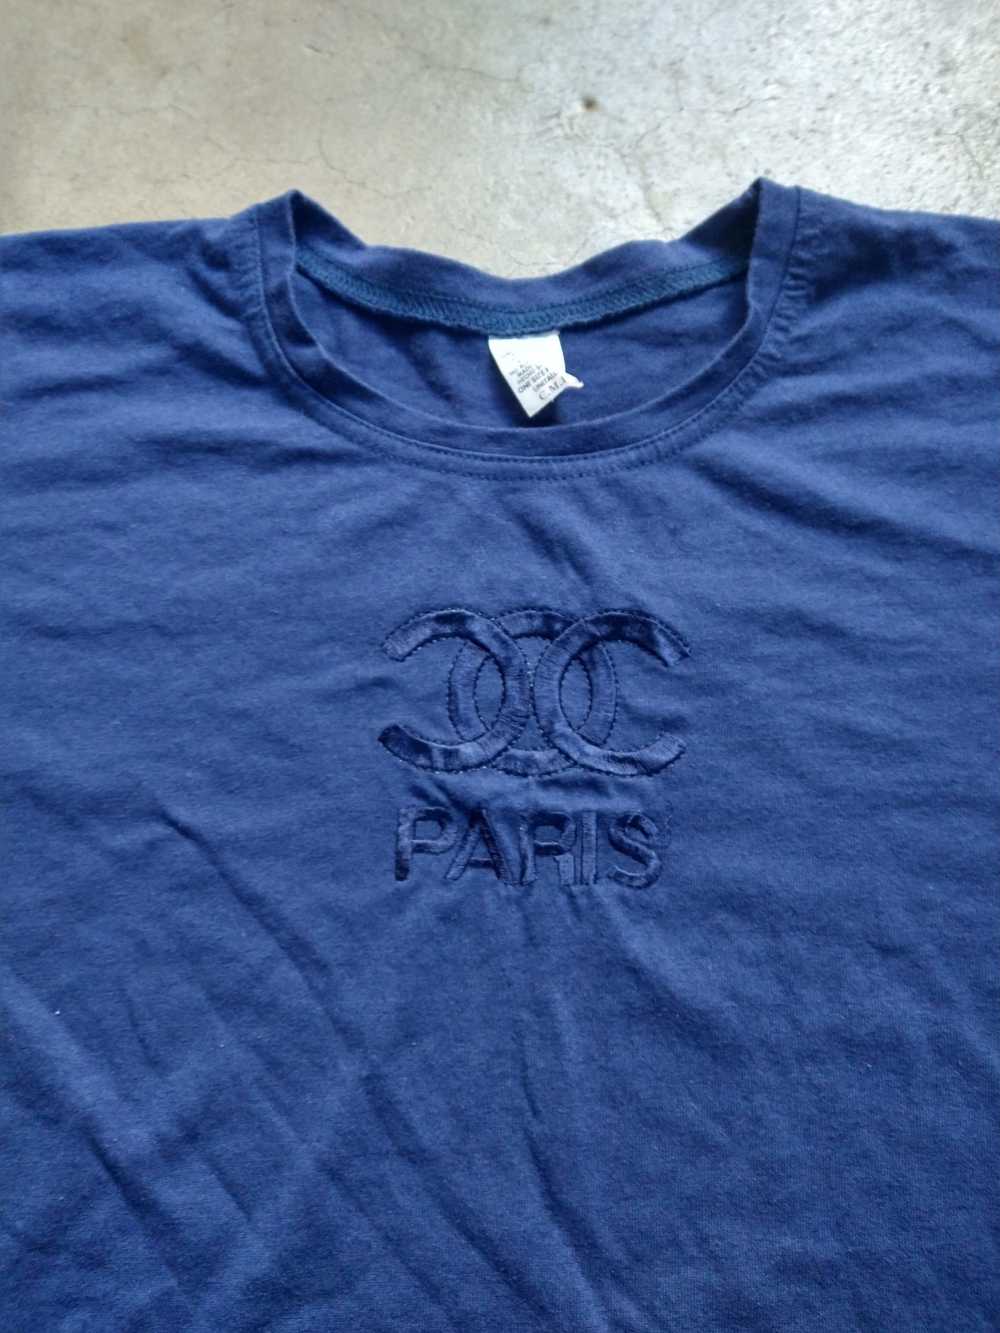 Vintage Vintage Tshirt Navy Blue Tee Paris Short … - image 2